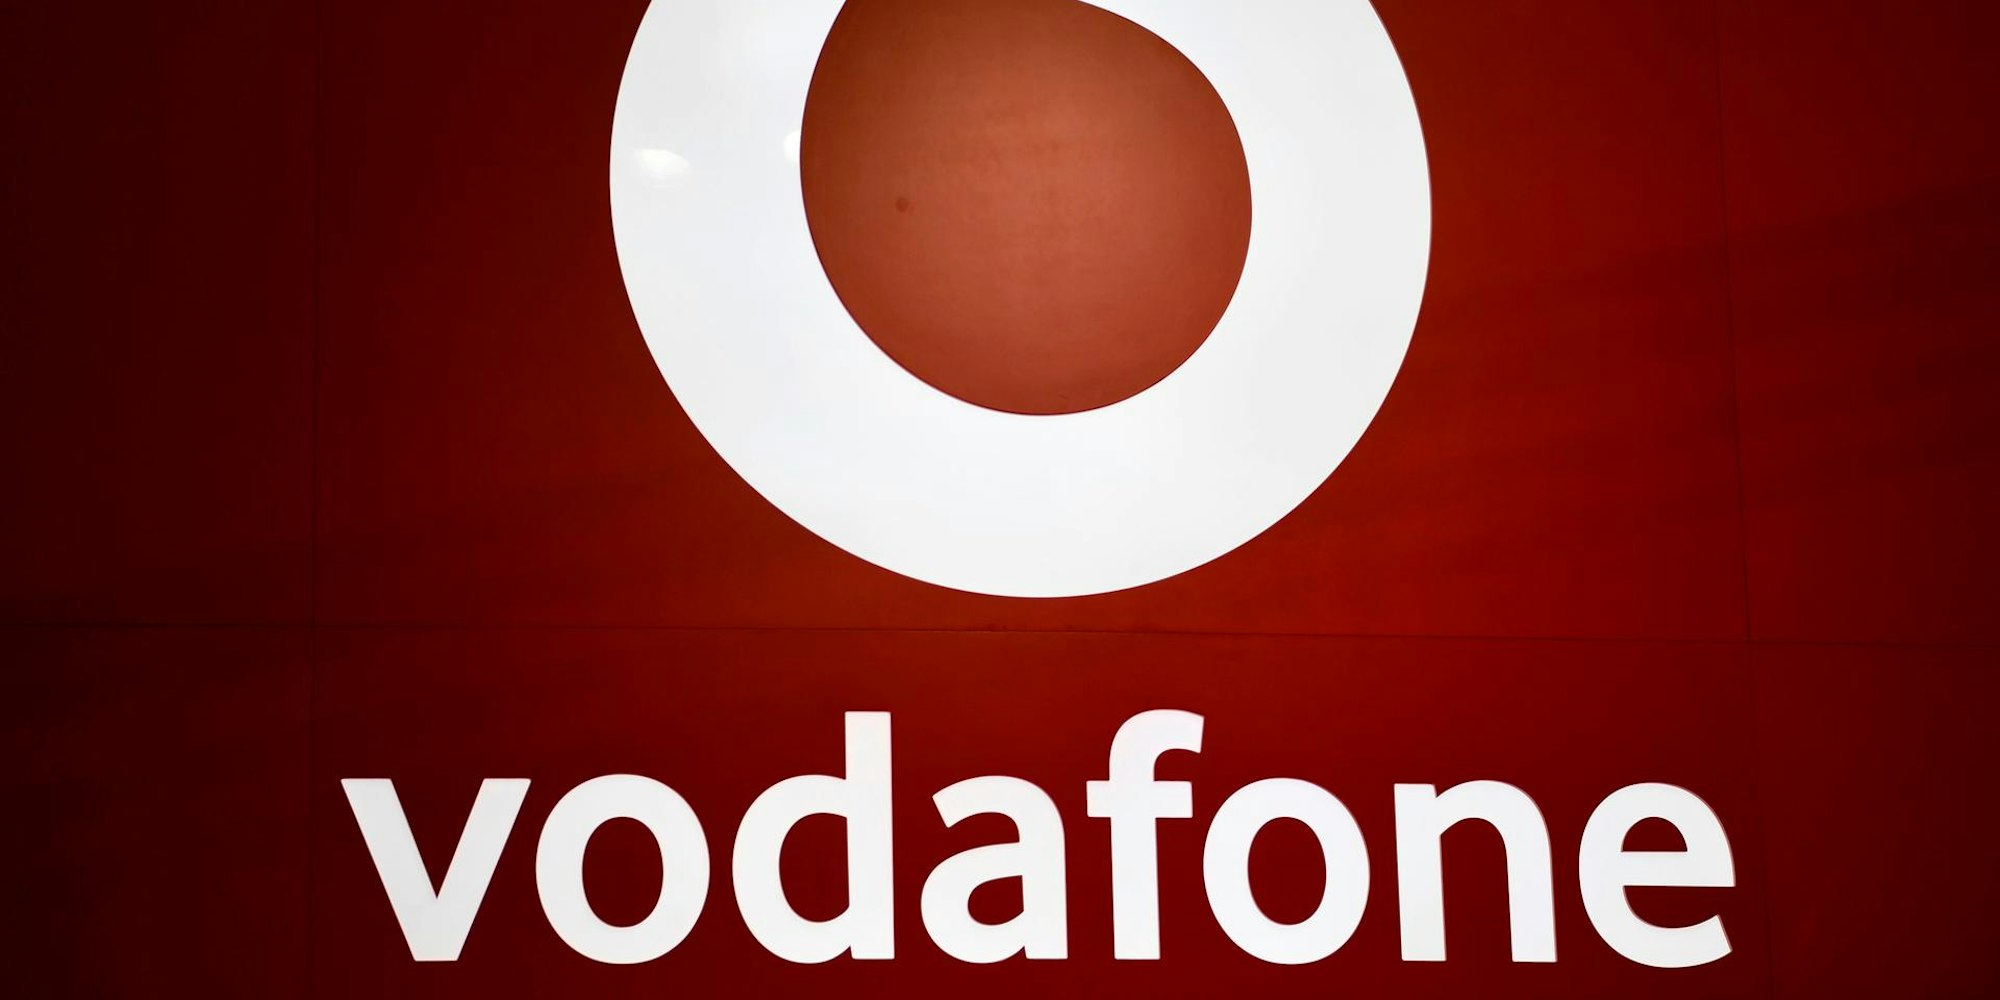 Vodafone afp neu